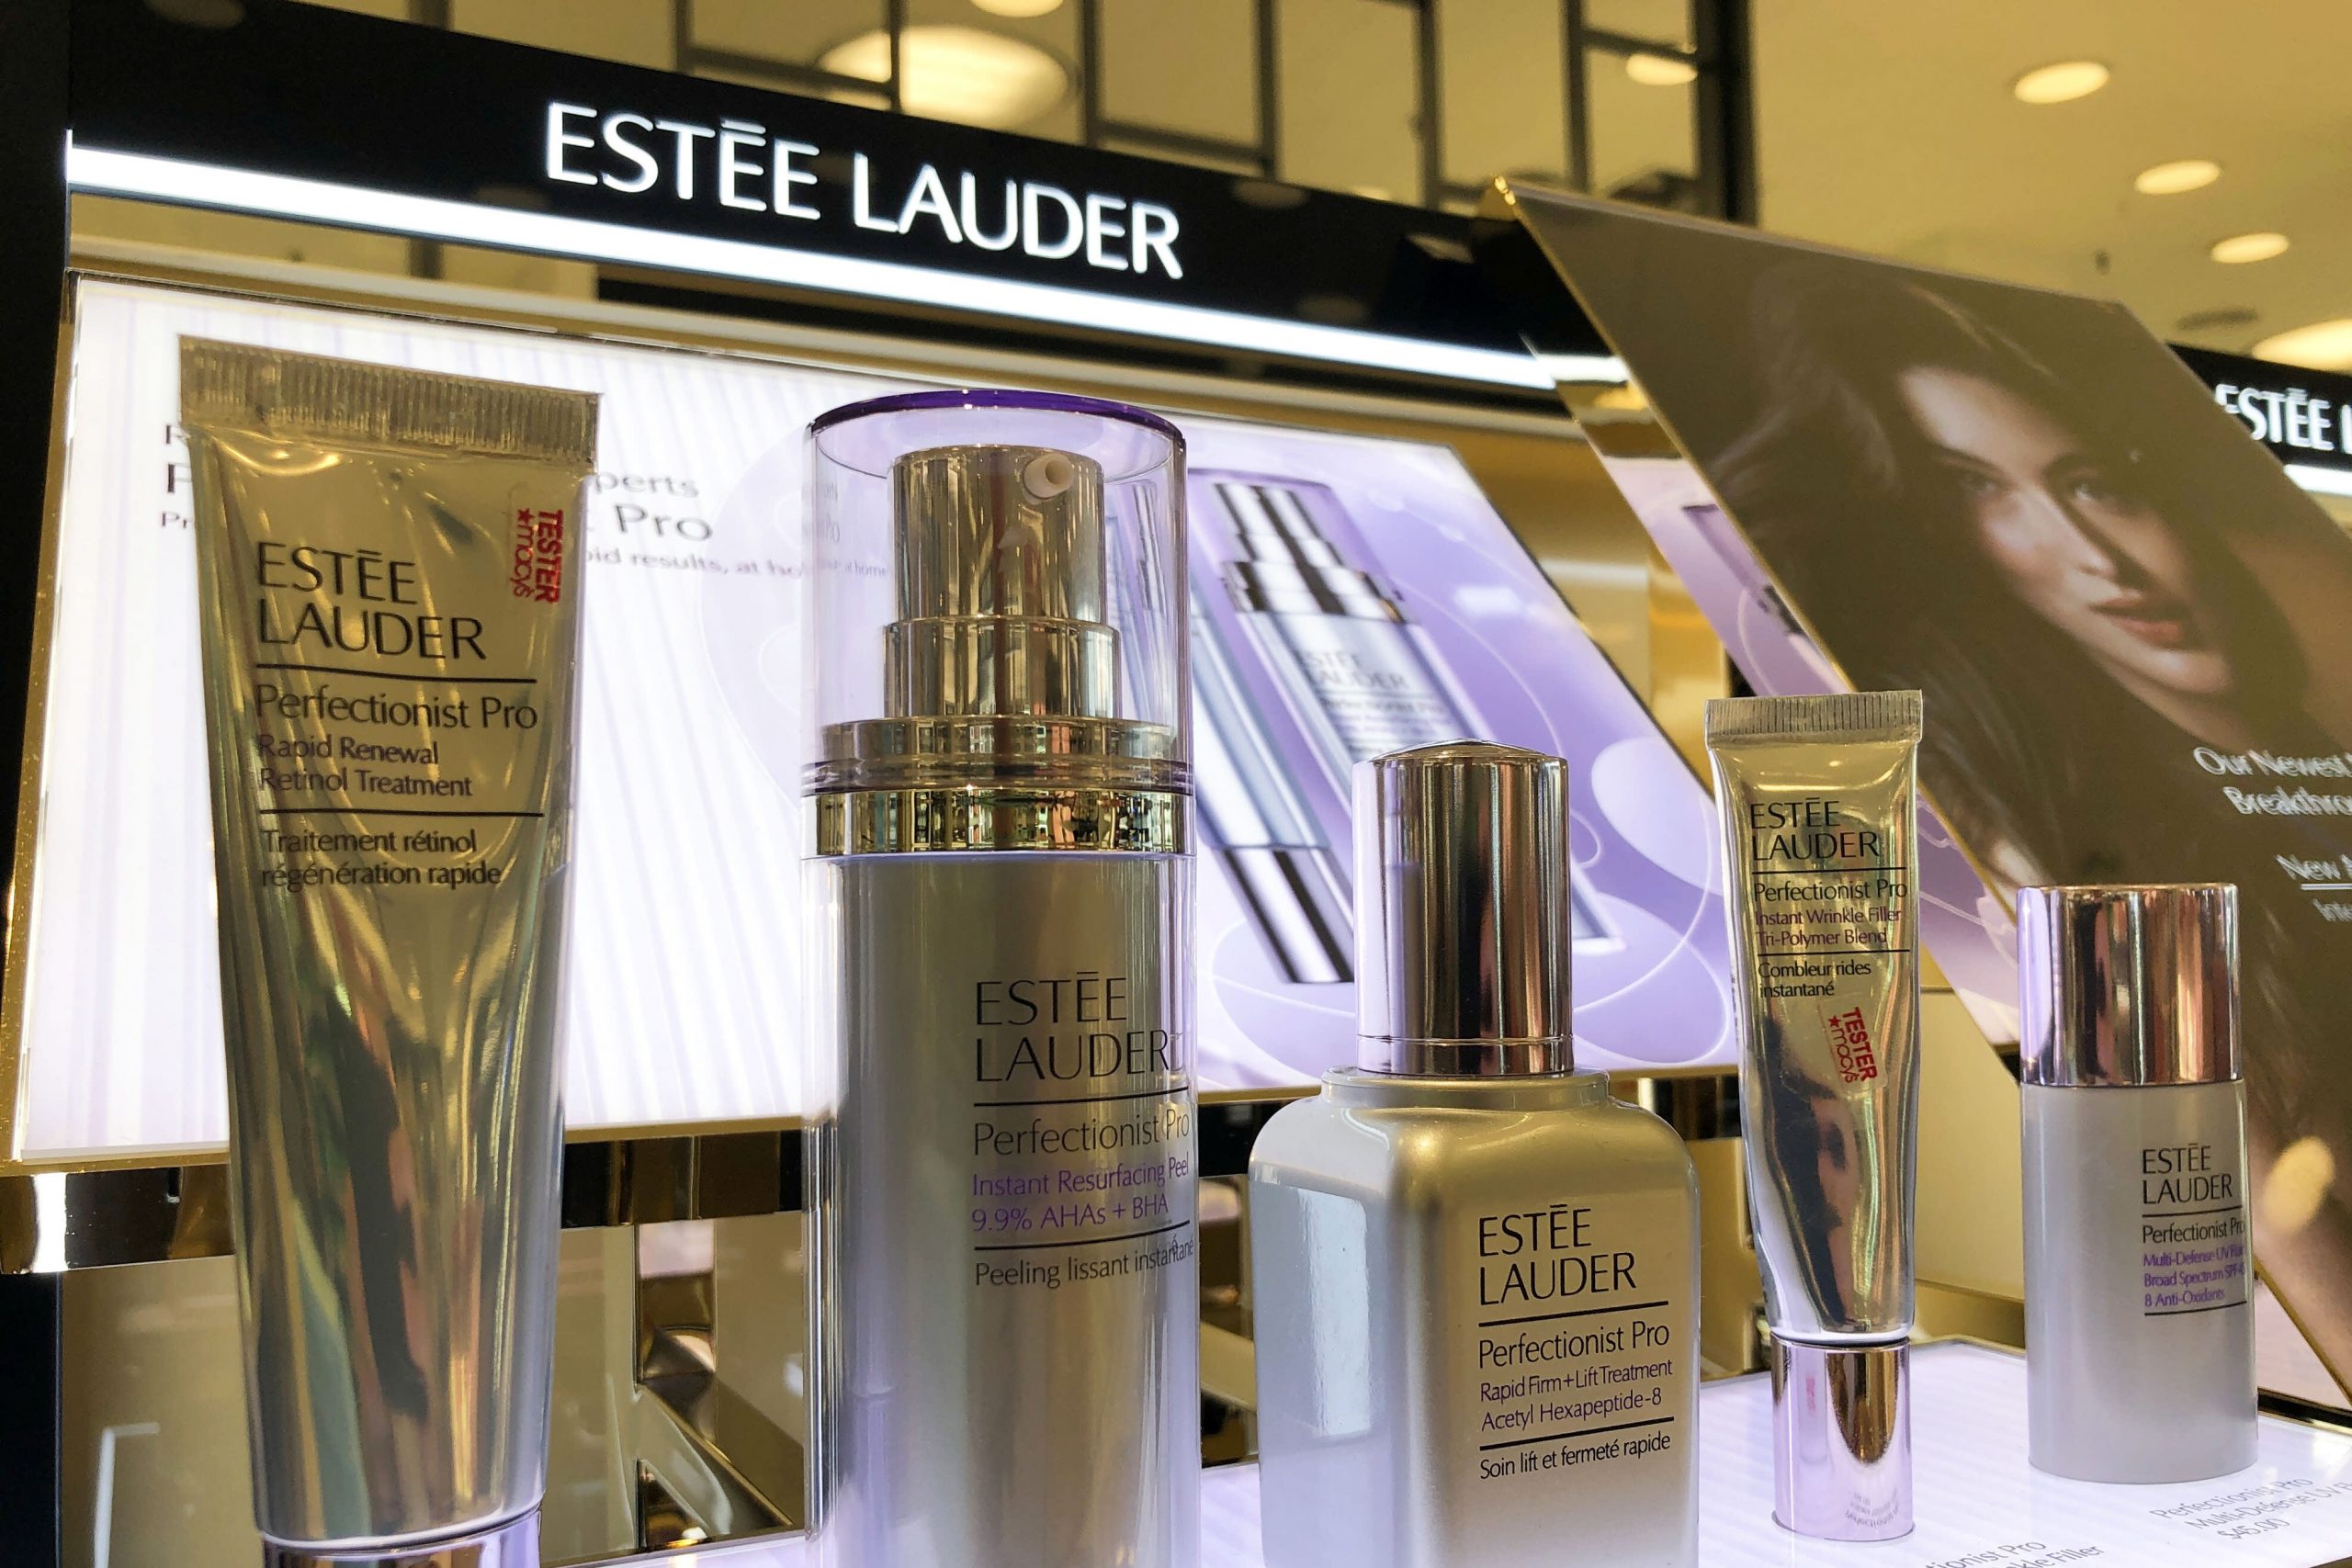 Estee Lauder snaps three straight quarters of gross sales declines